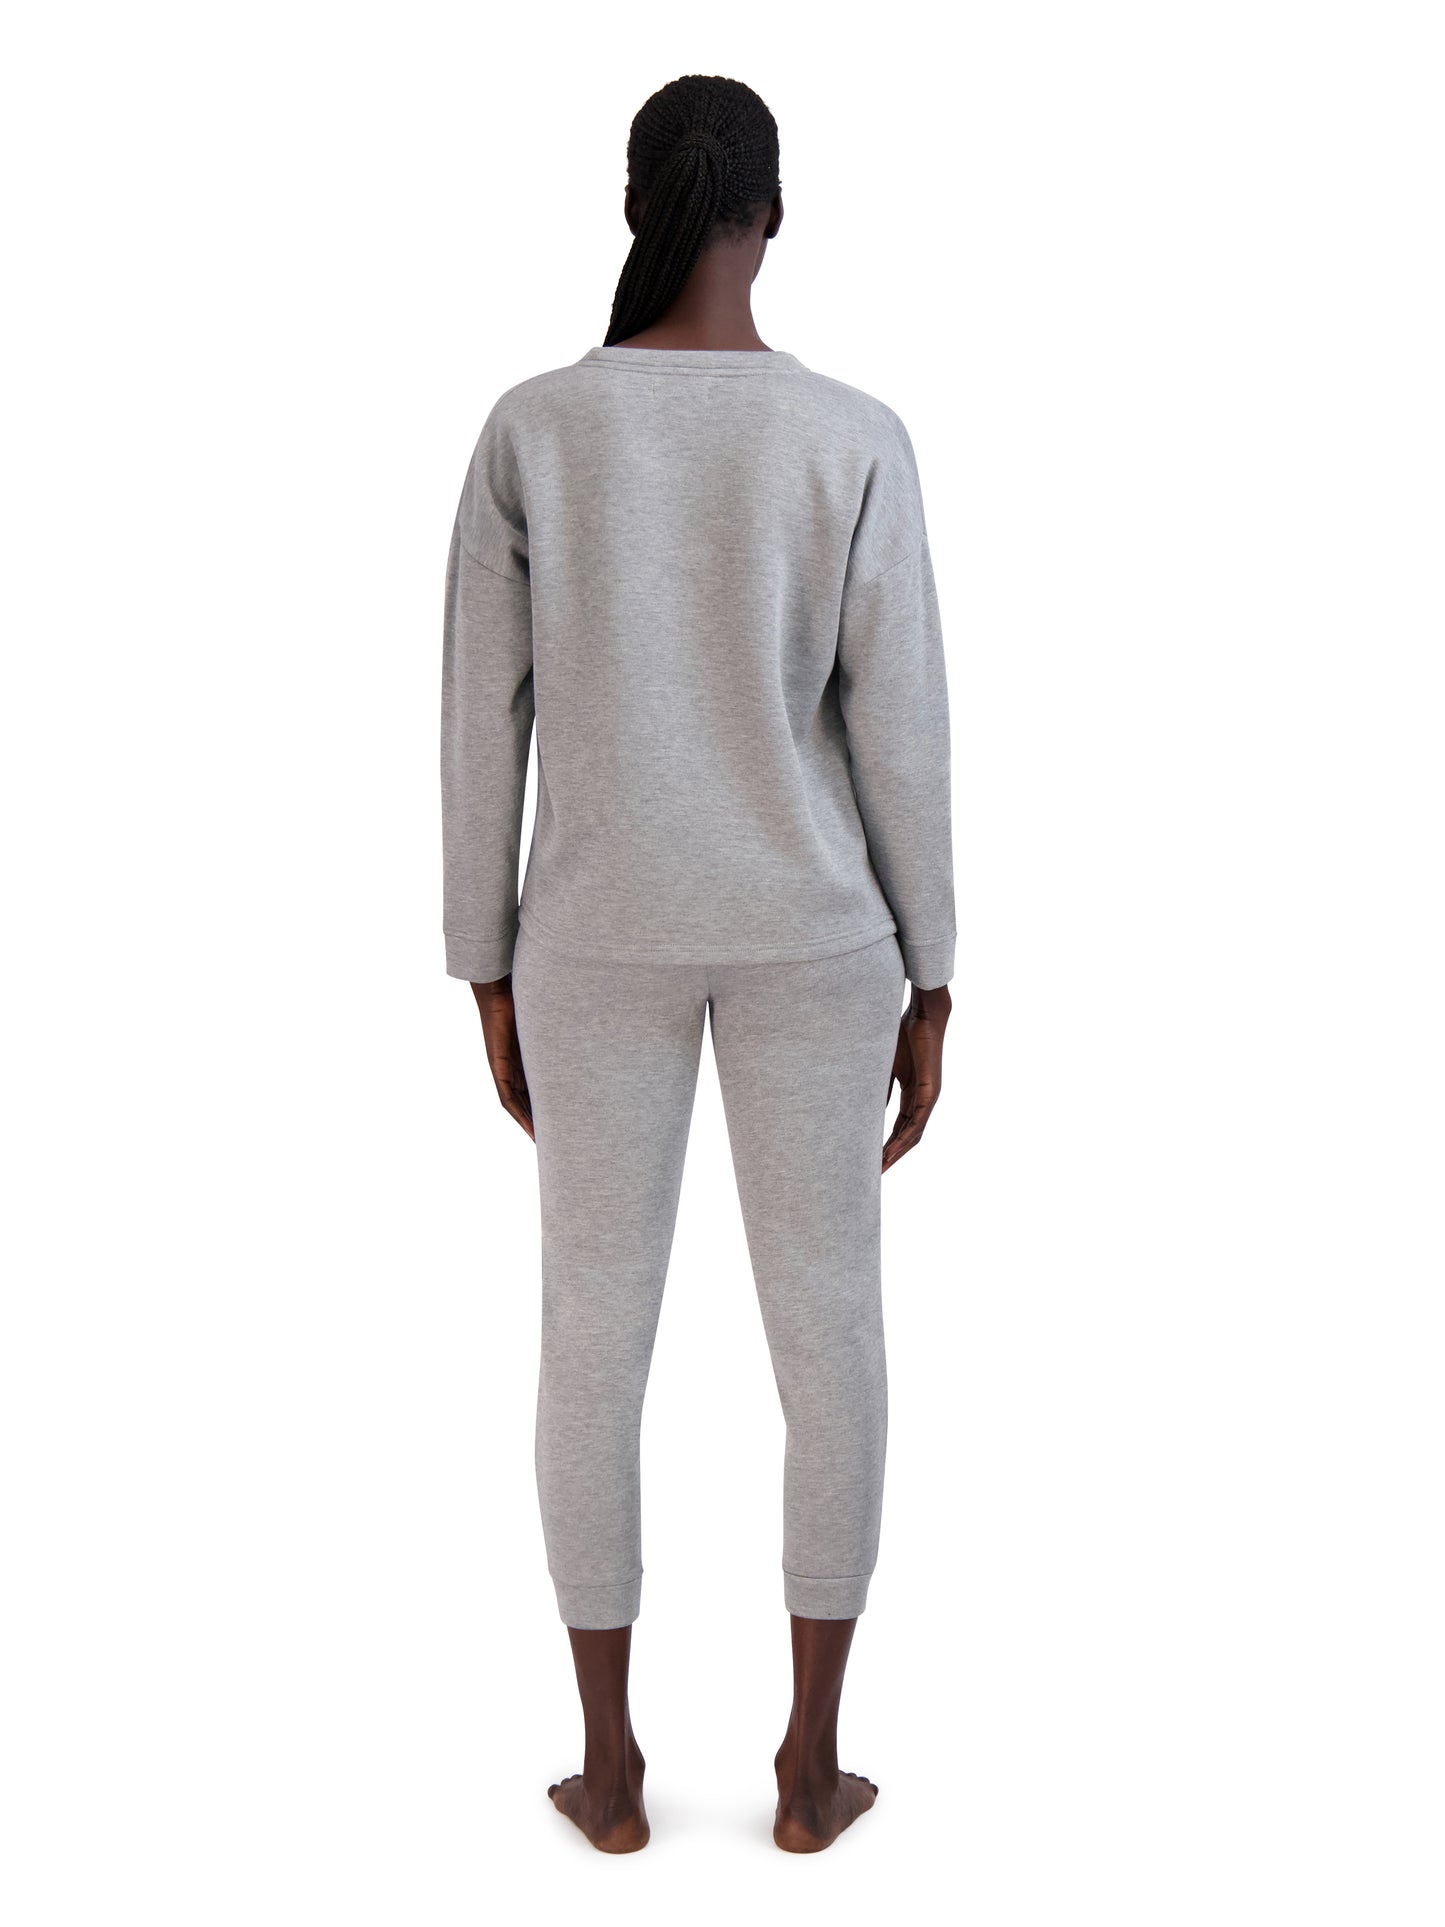 Women's "GRATEFUL" Pullover Sweatshirt and Drawstring Sweatpants 2-Piece Lounge Set - Rae Dunn Wear - W A Pants Set